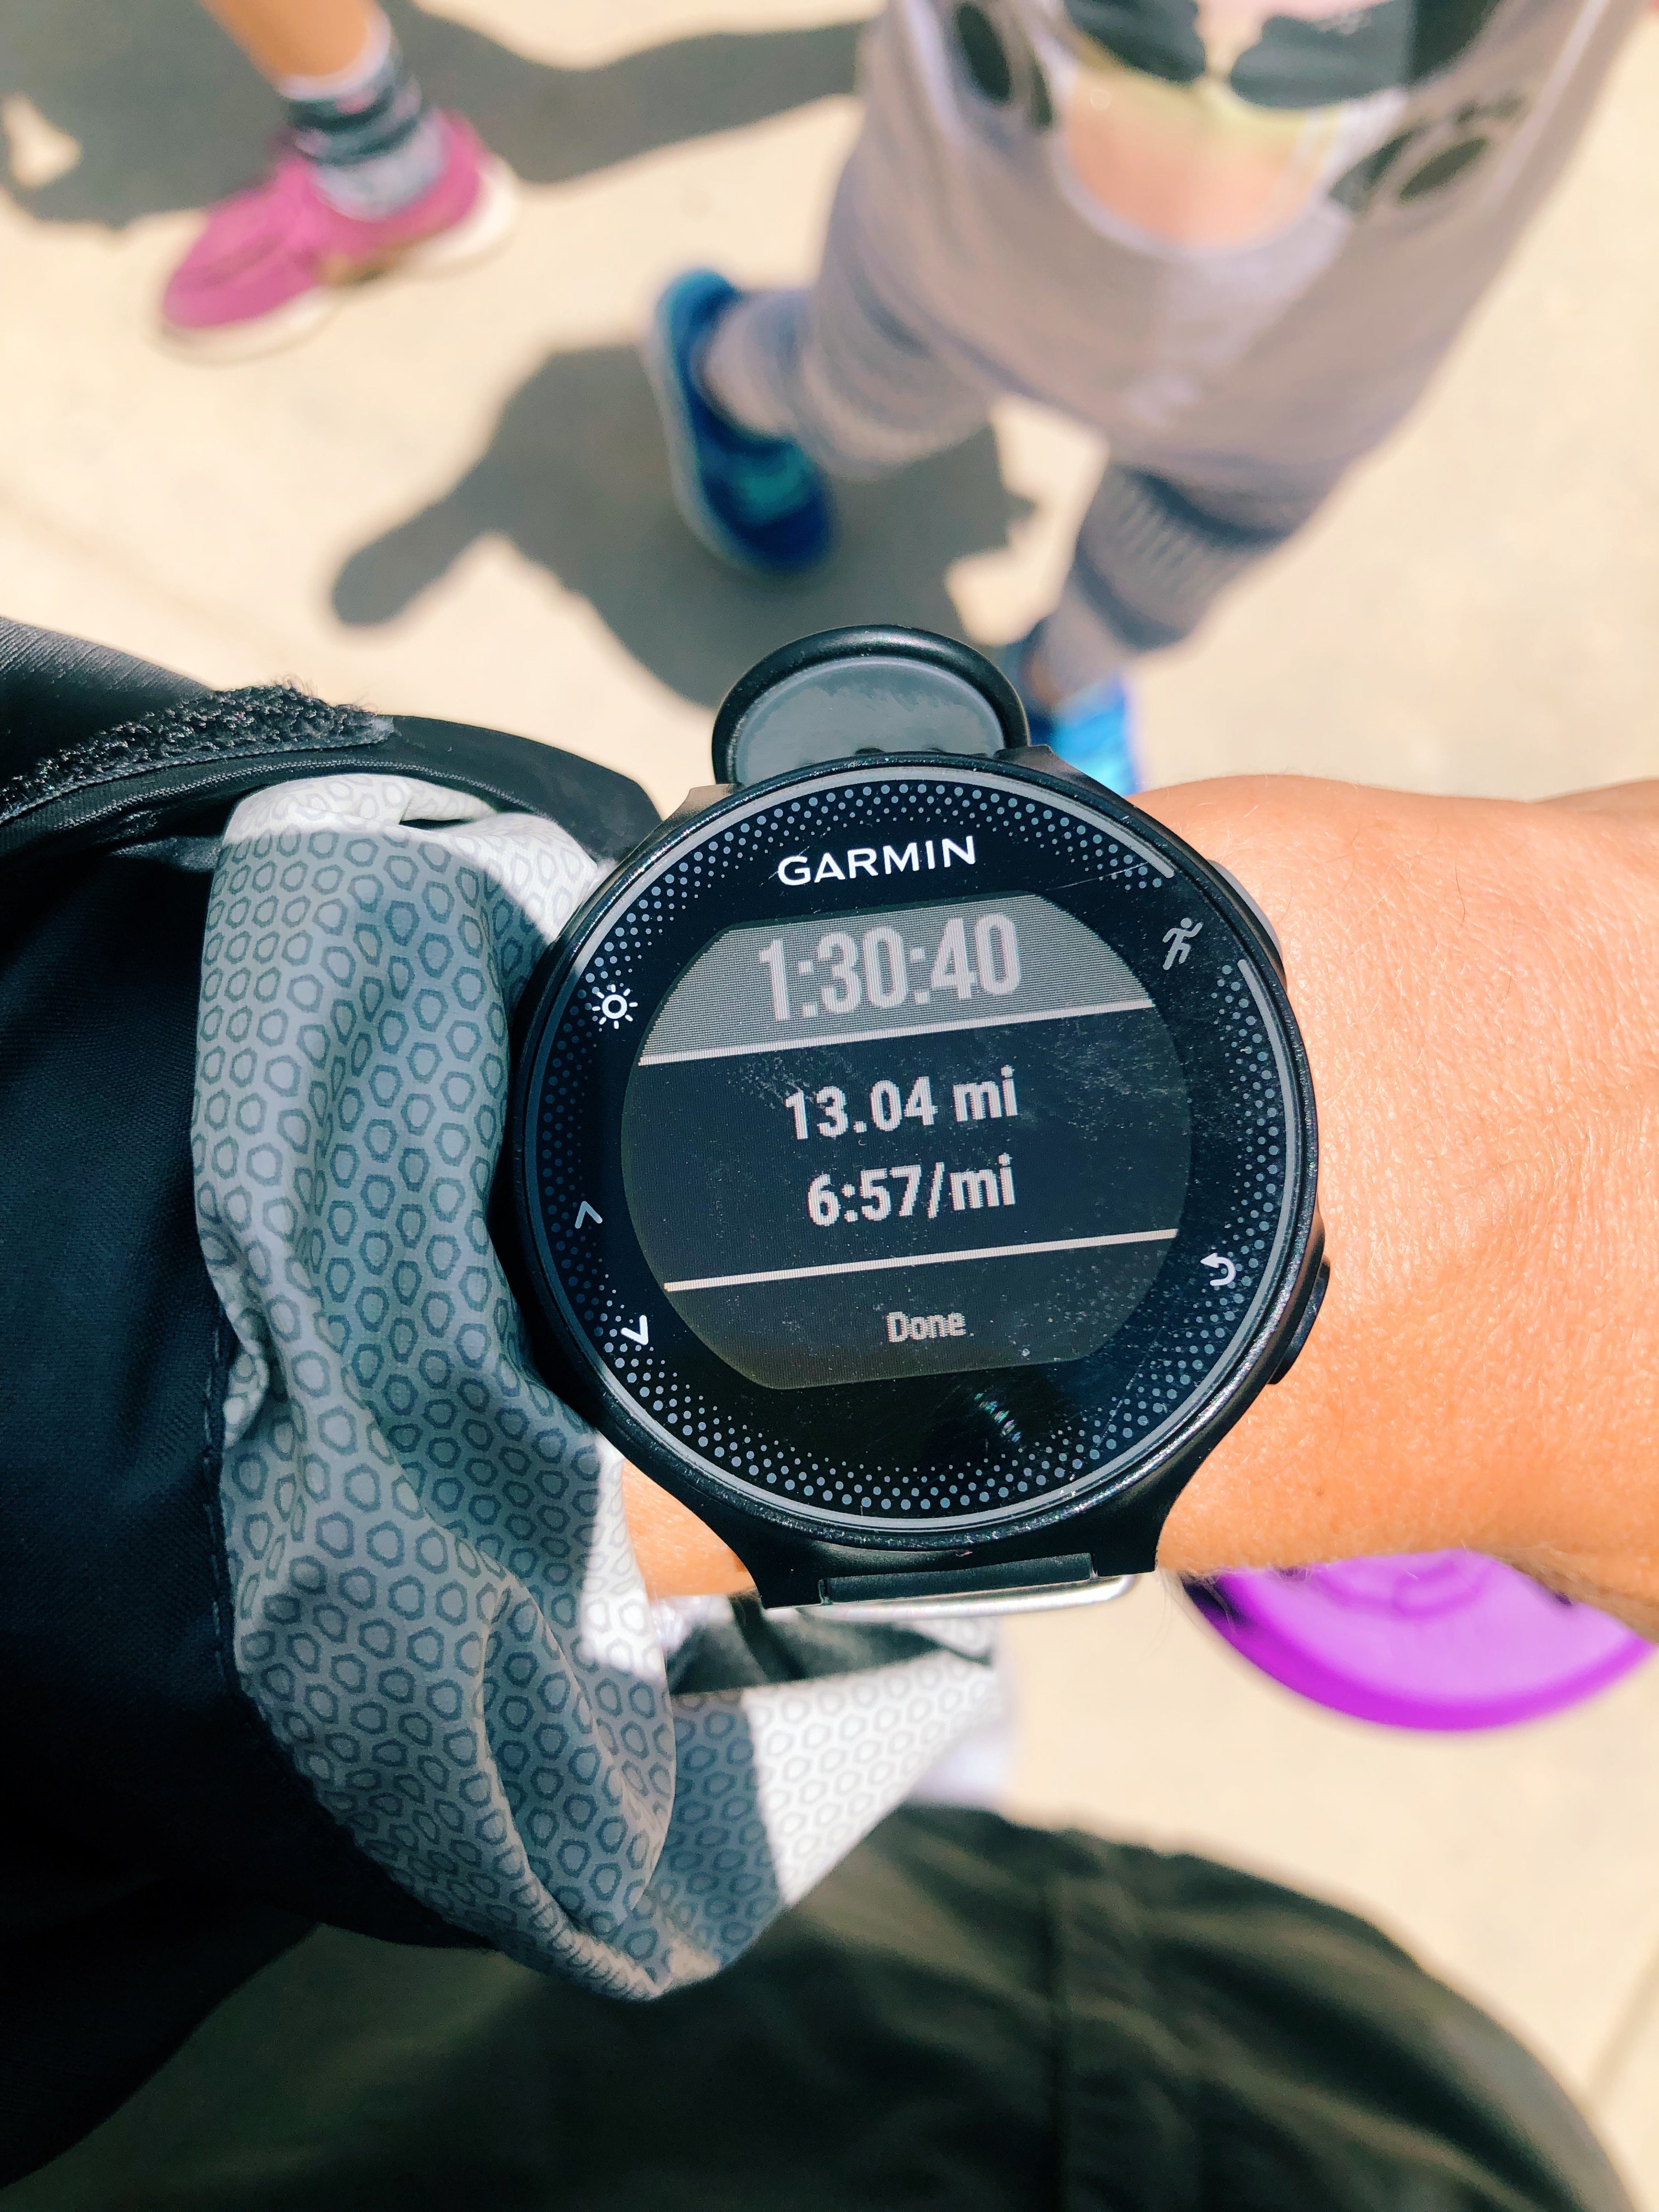 Garmin watch | How To Train For A Half Marathon